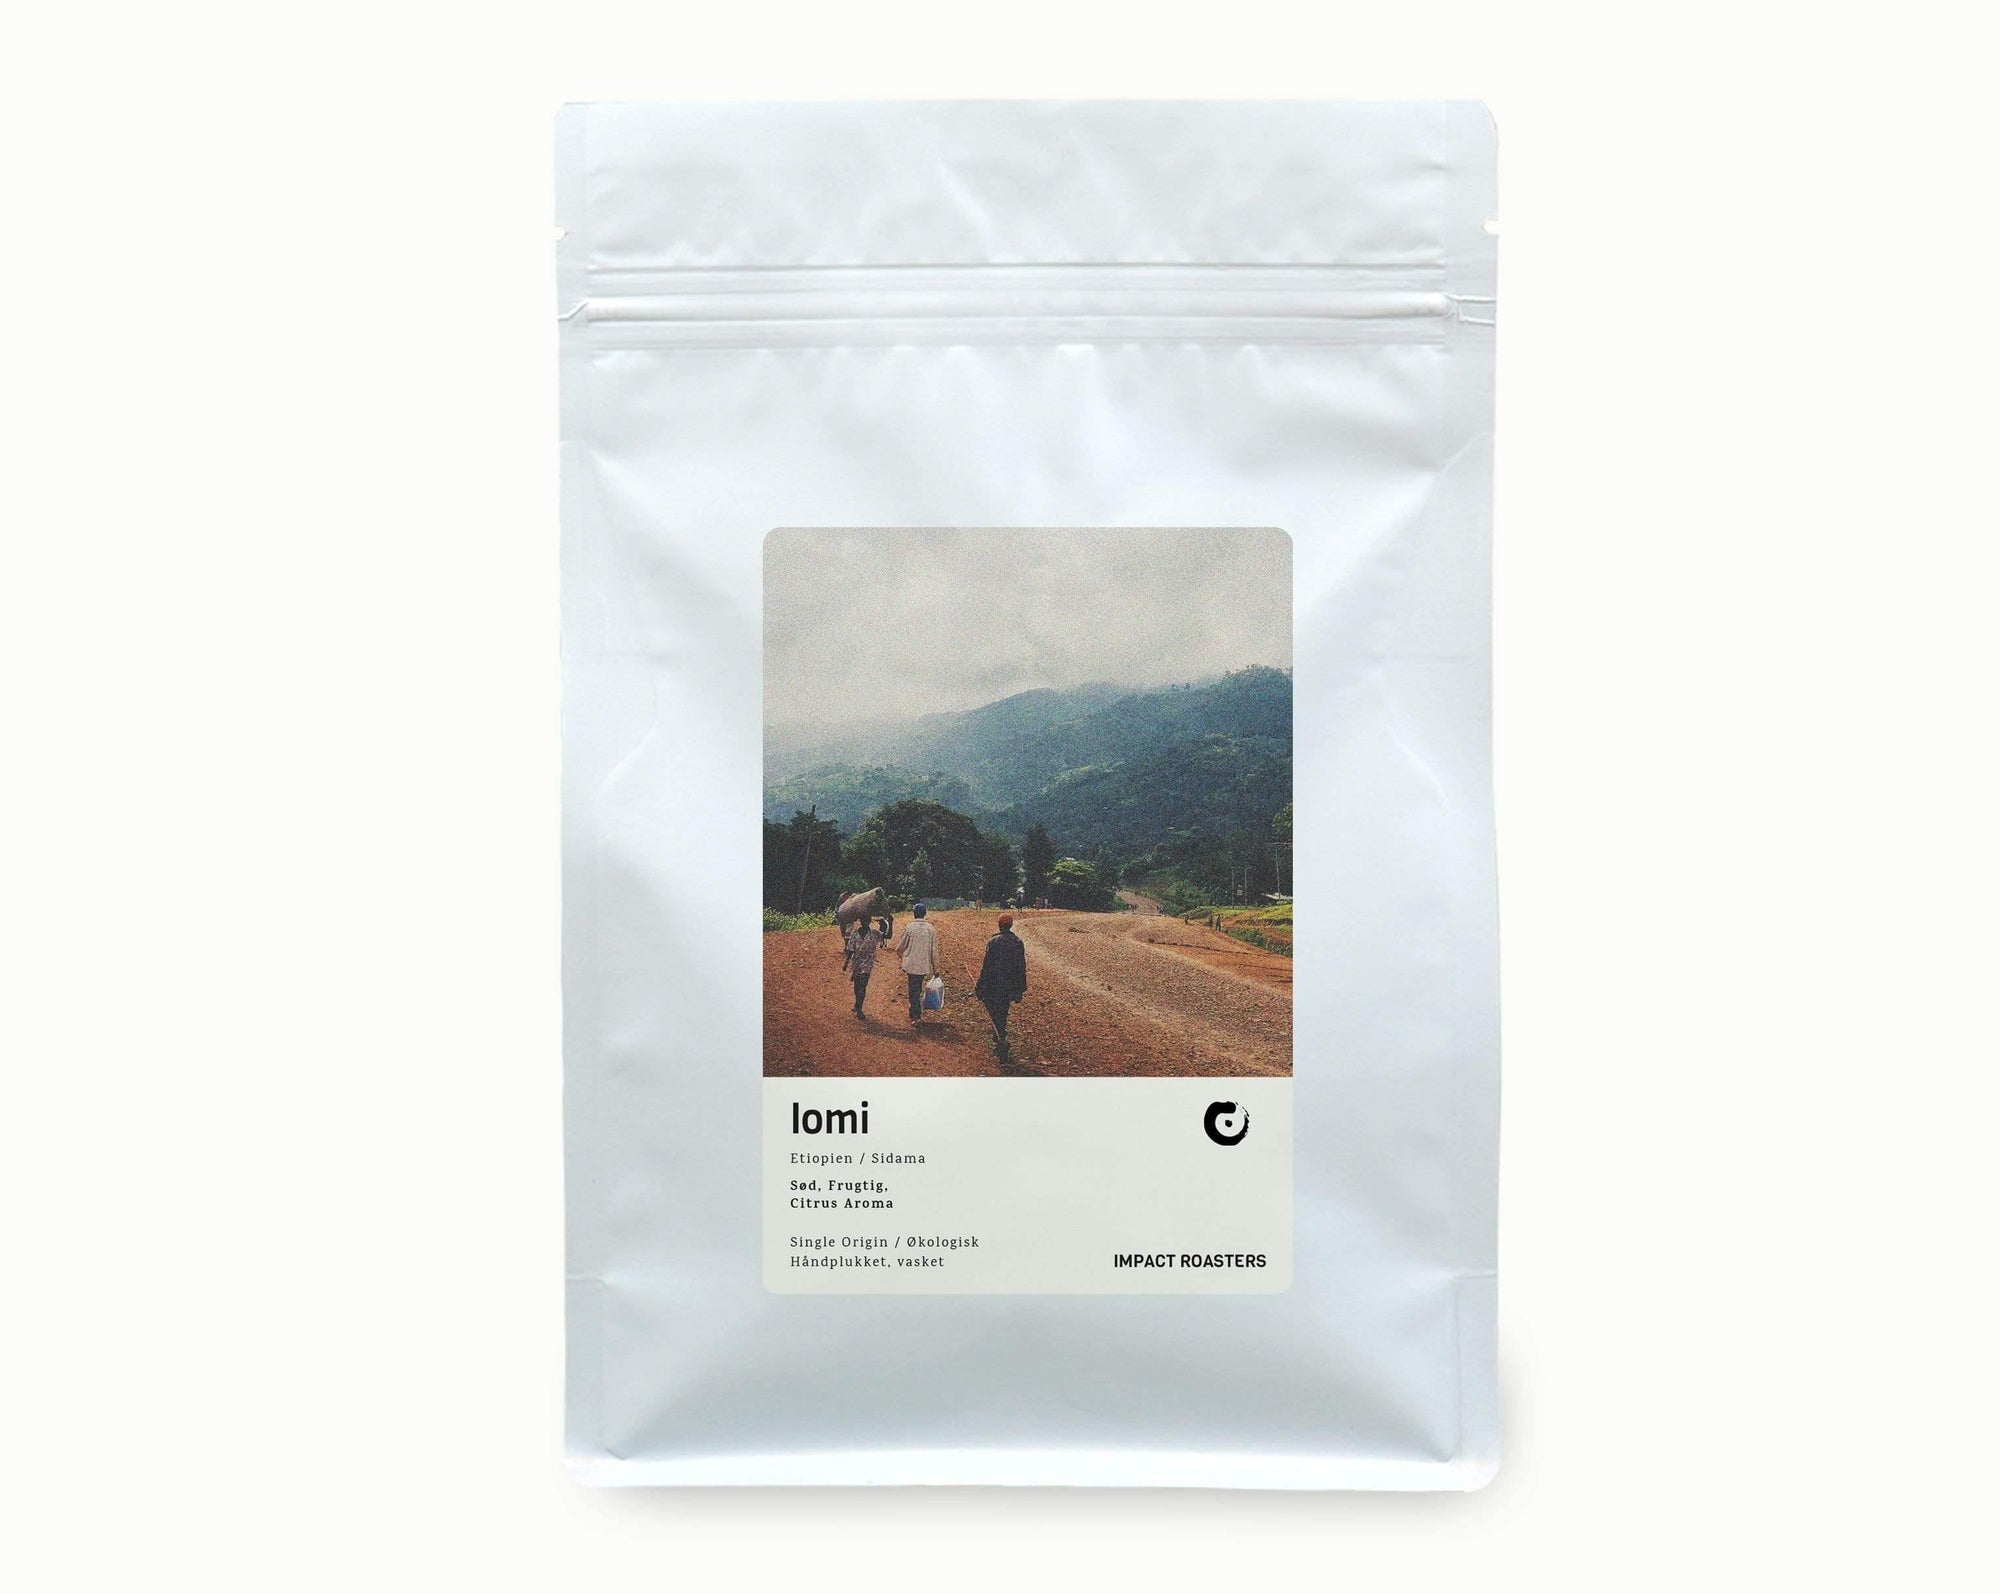 Lomi bag of organic Ethiopian coffee beans from Sidama region